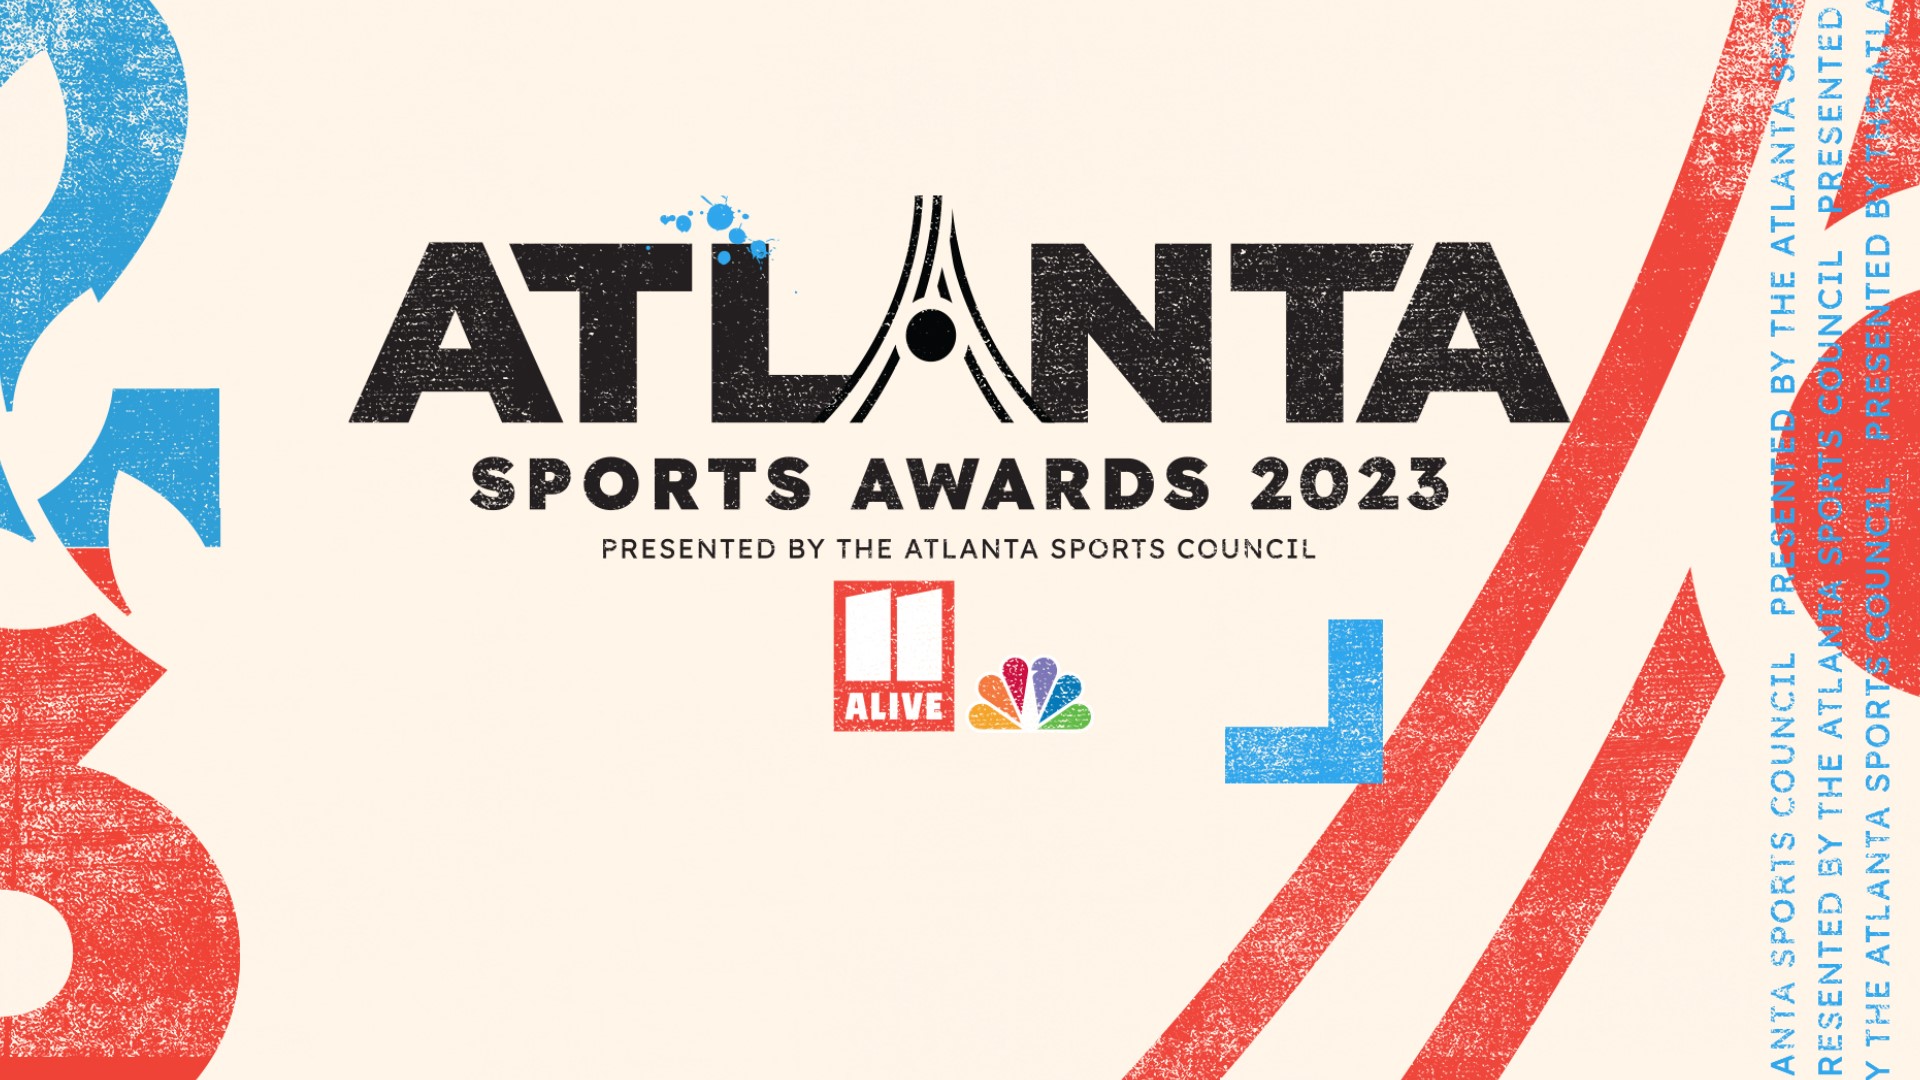 Re-live the 2023 Atlanta Sports Awards, presented by the Atlanta Sports Council.